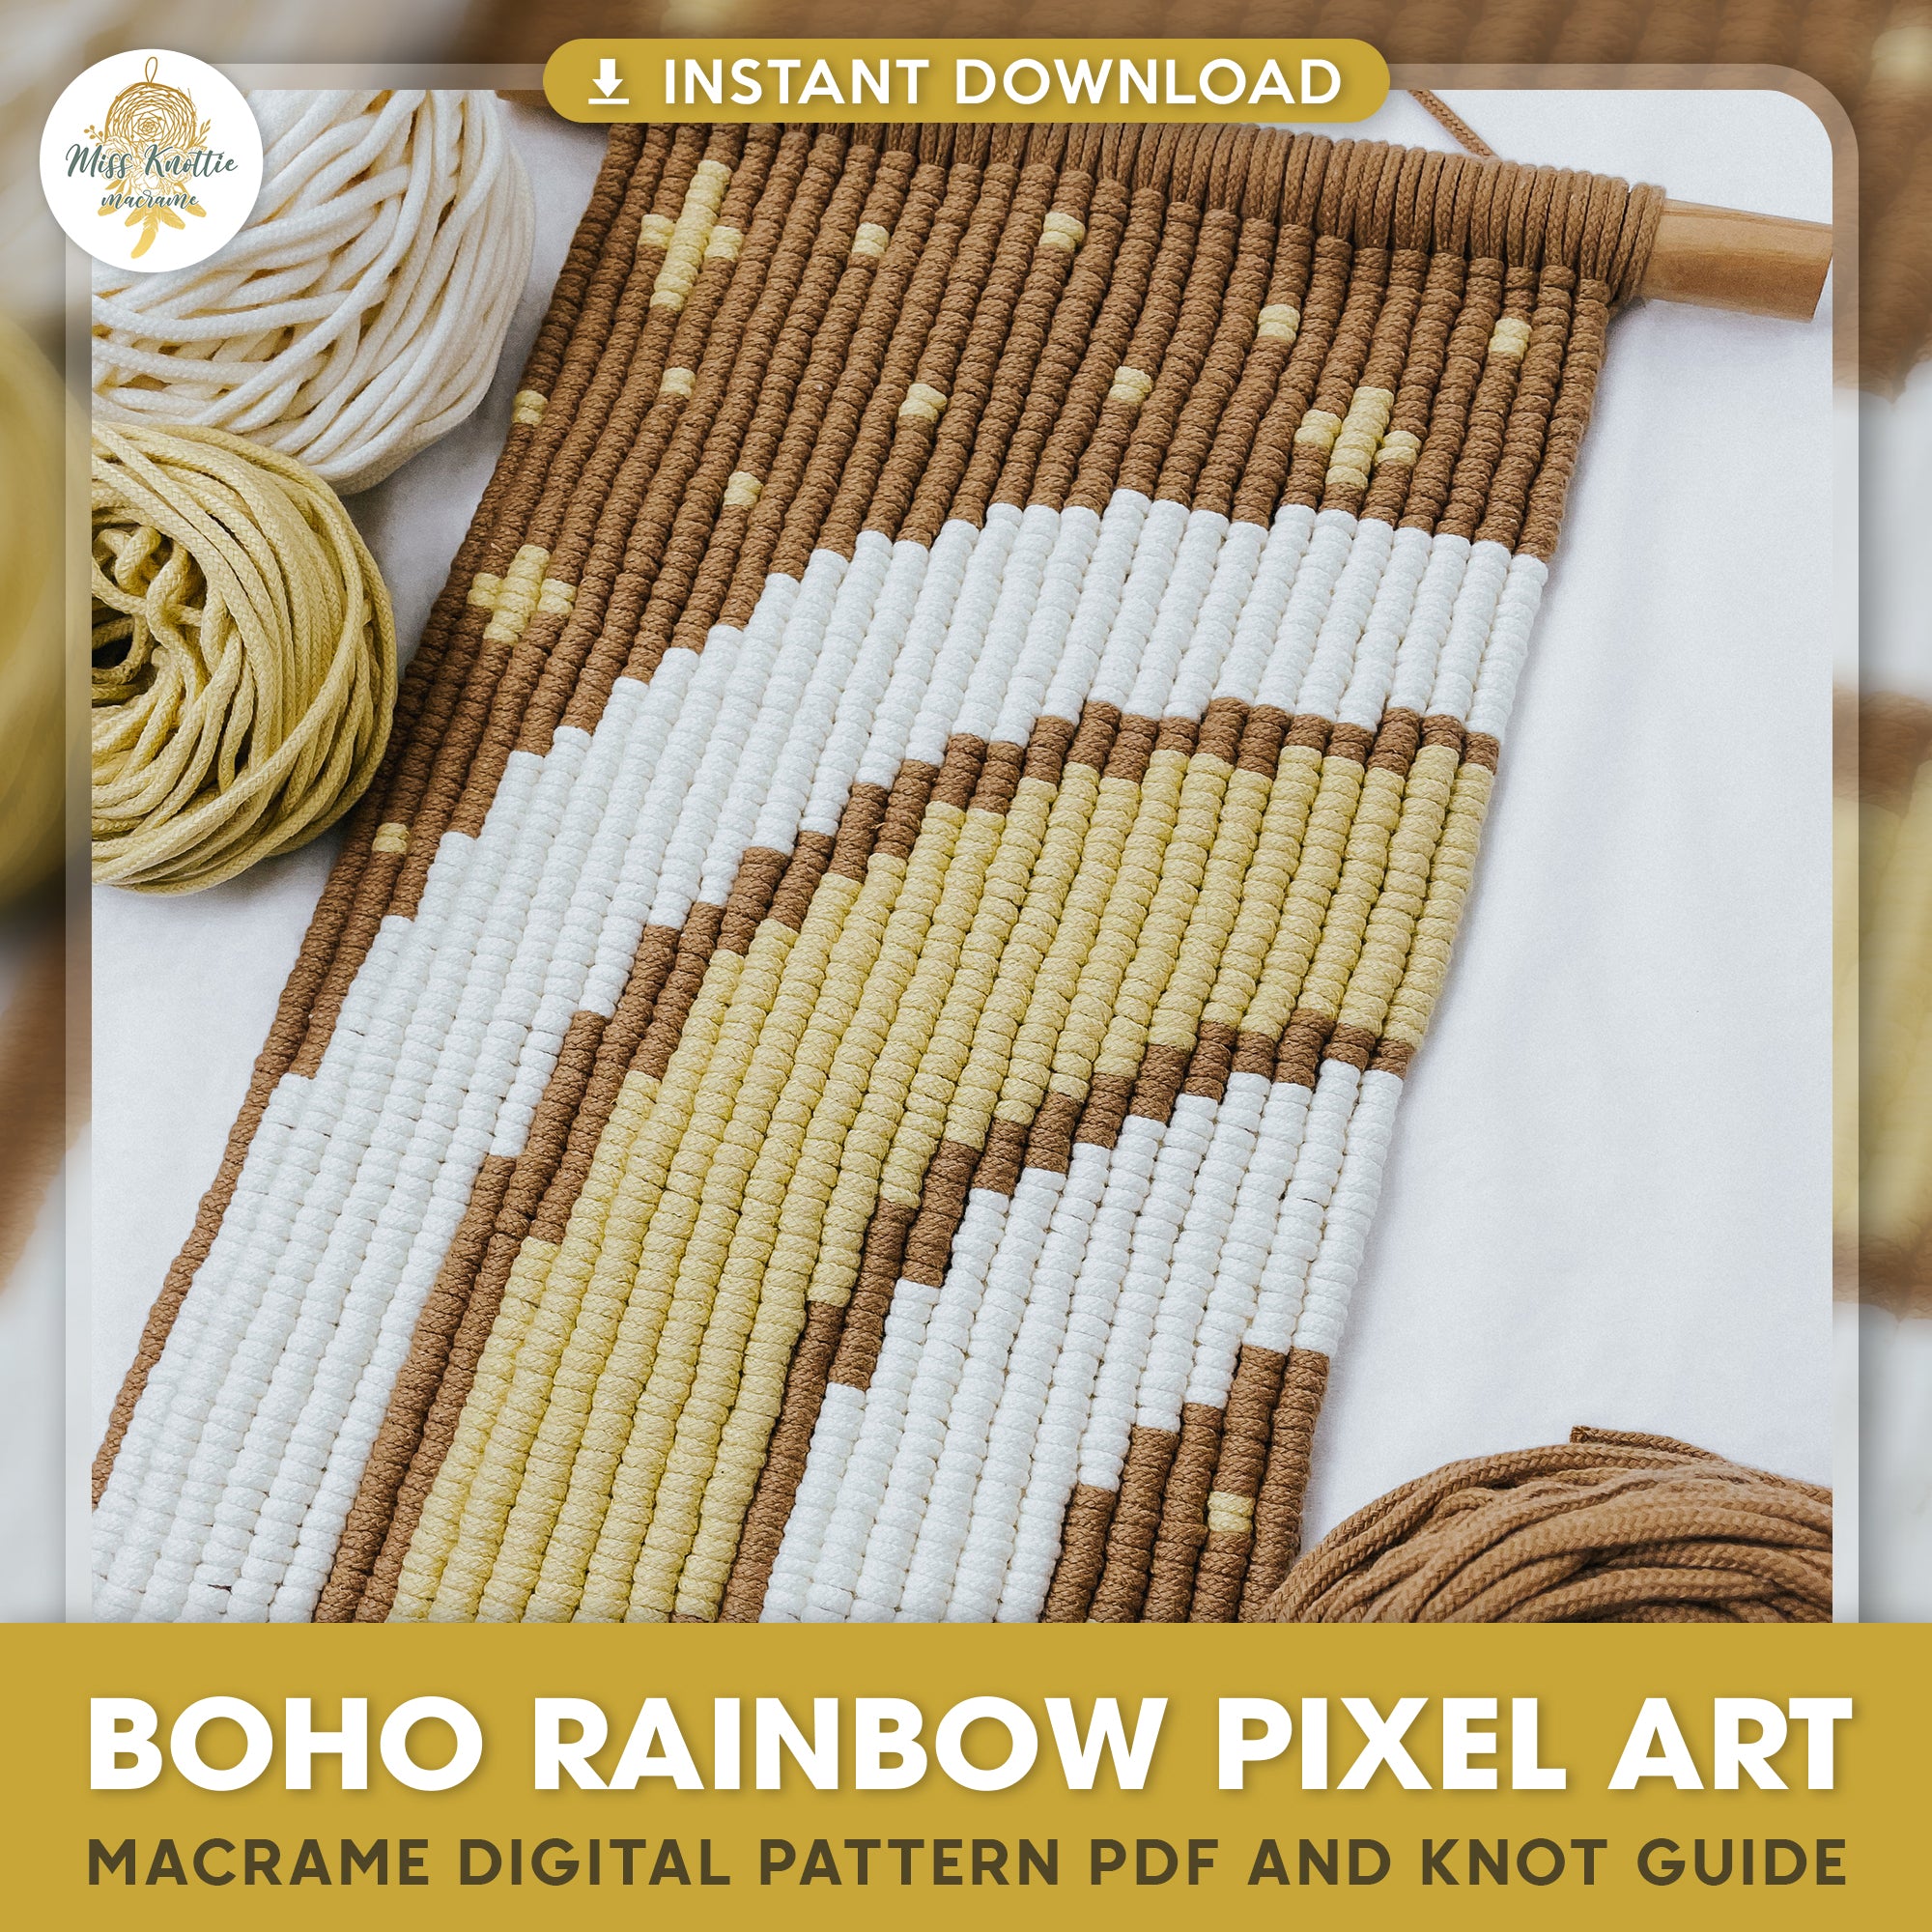 Boho Rainbow Pixel Pattern - Digital PDF and Knot Guide